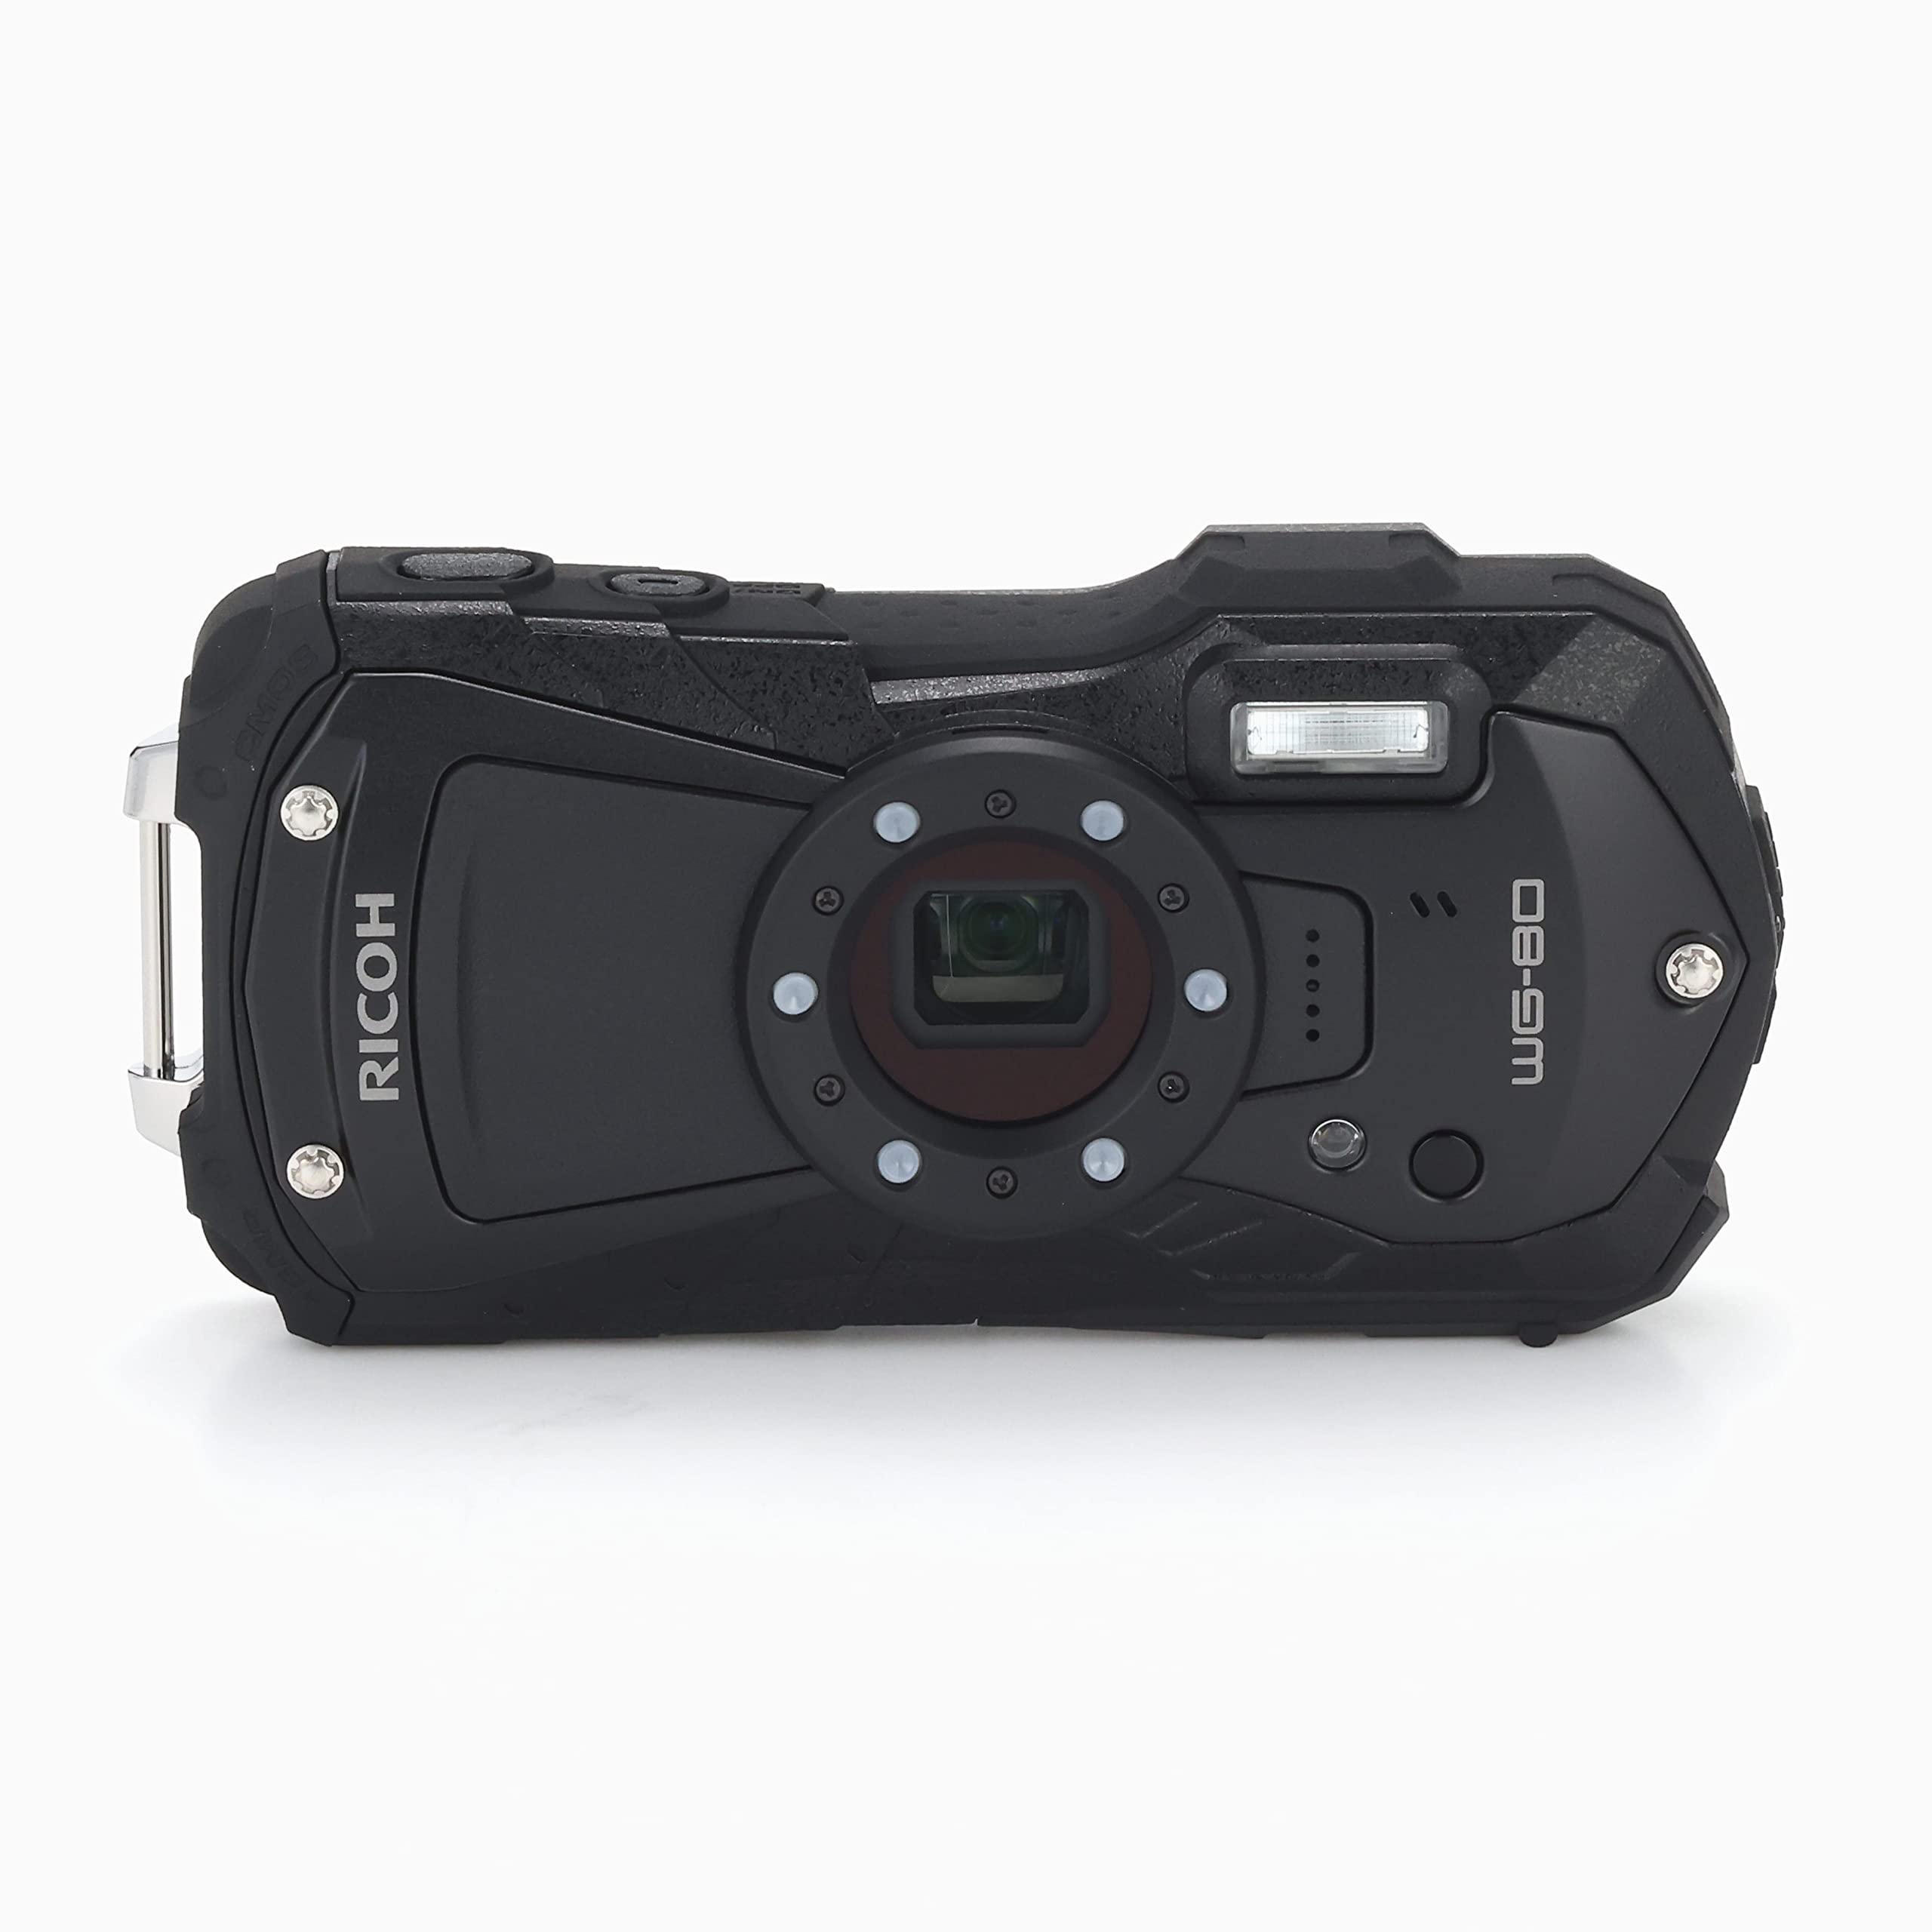 Ricoh WG-80 Black Waterproof Digital Camera Shockproof Freezeproof Crushproof (International Version)